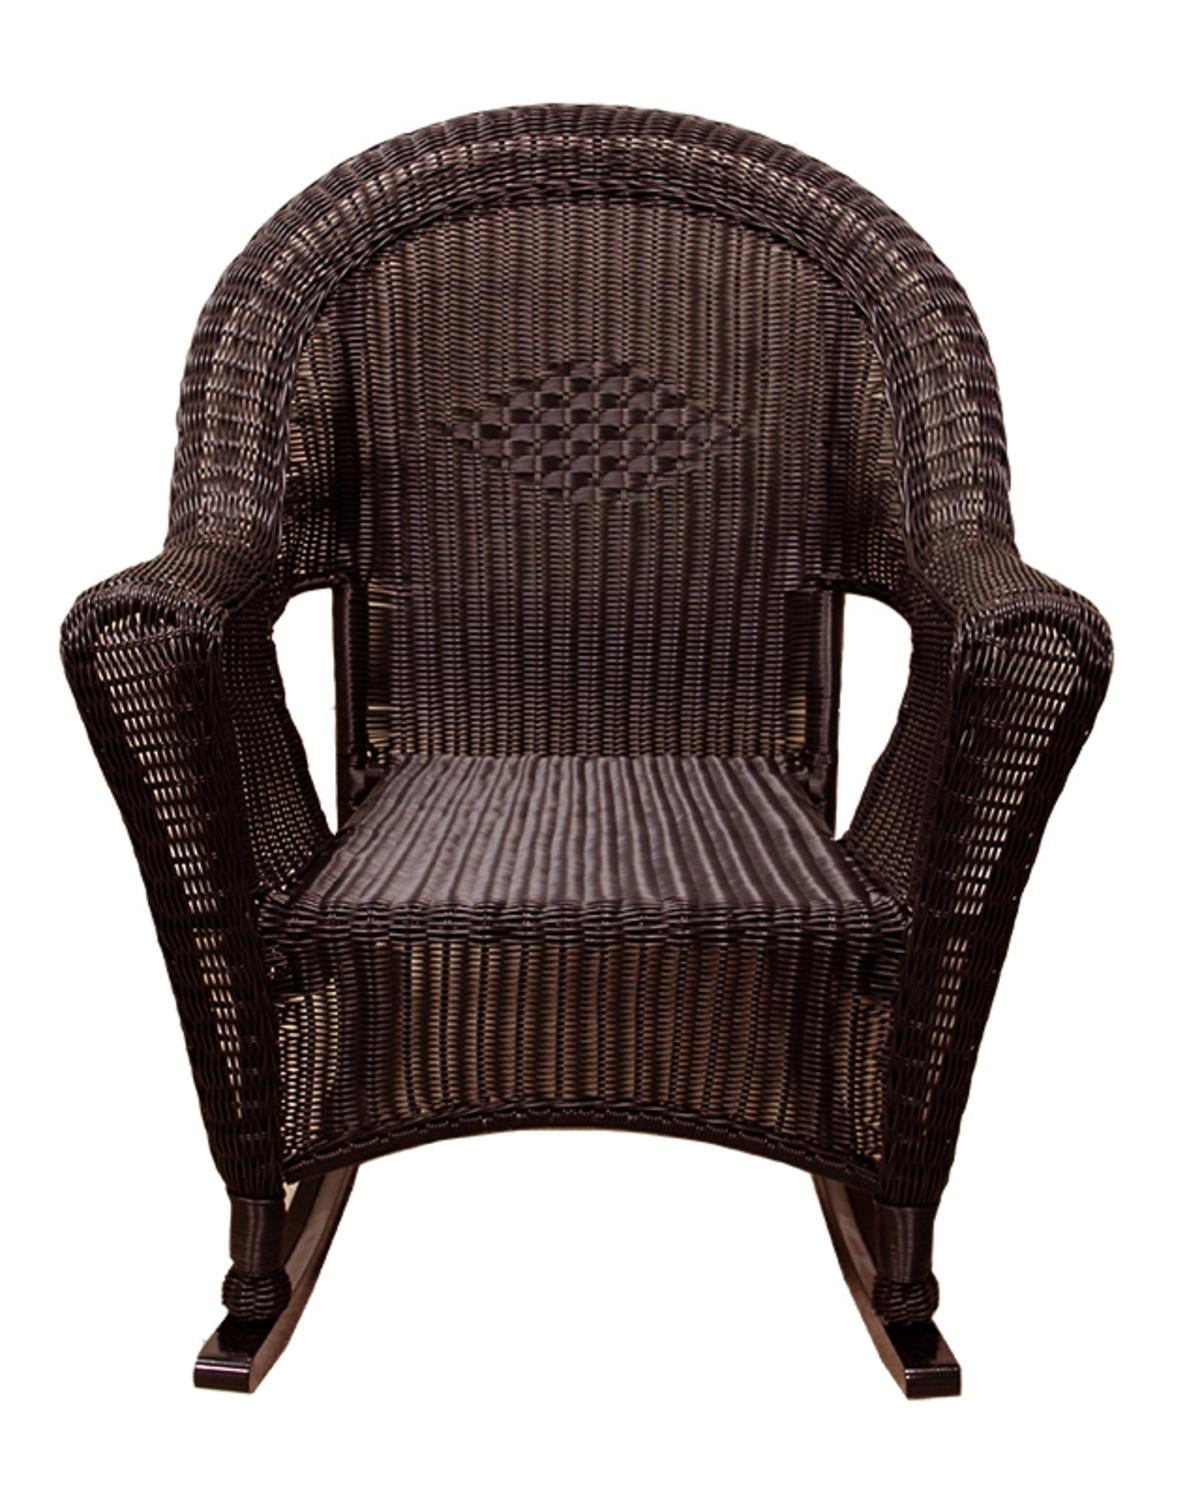 brown resin wicker rocking chair patio furniture  walmart